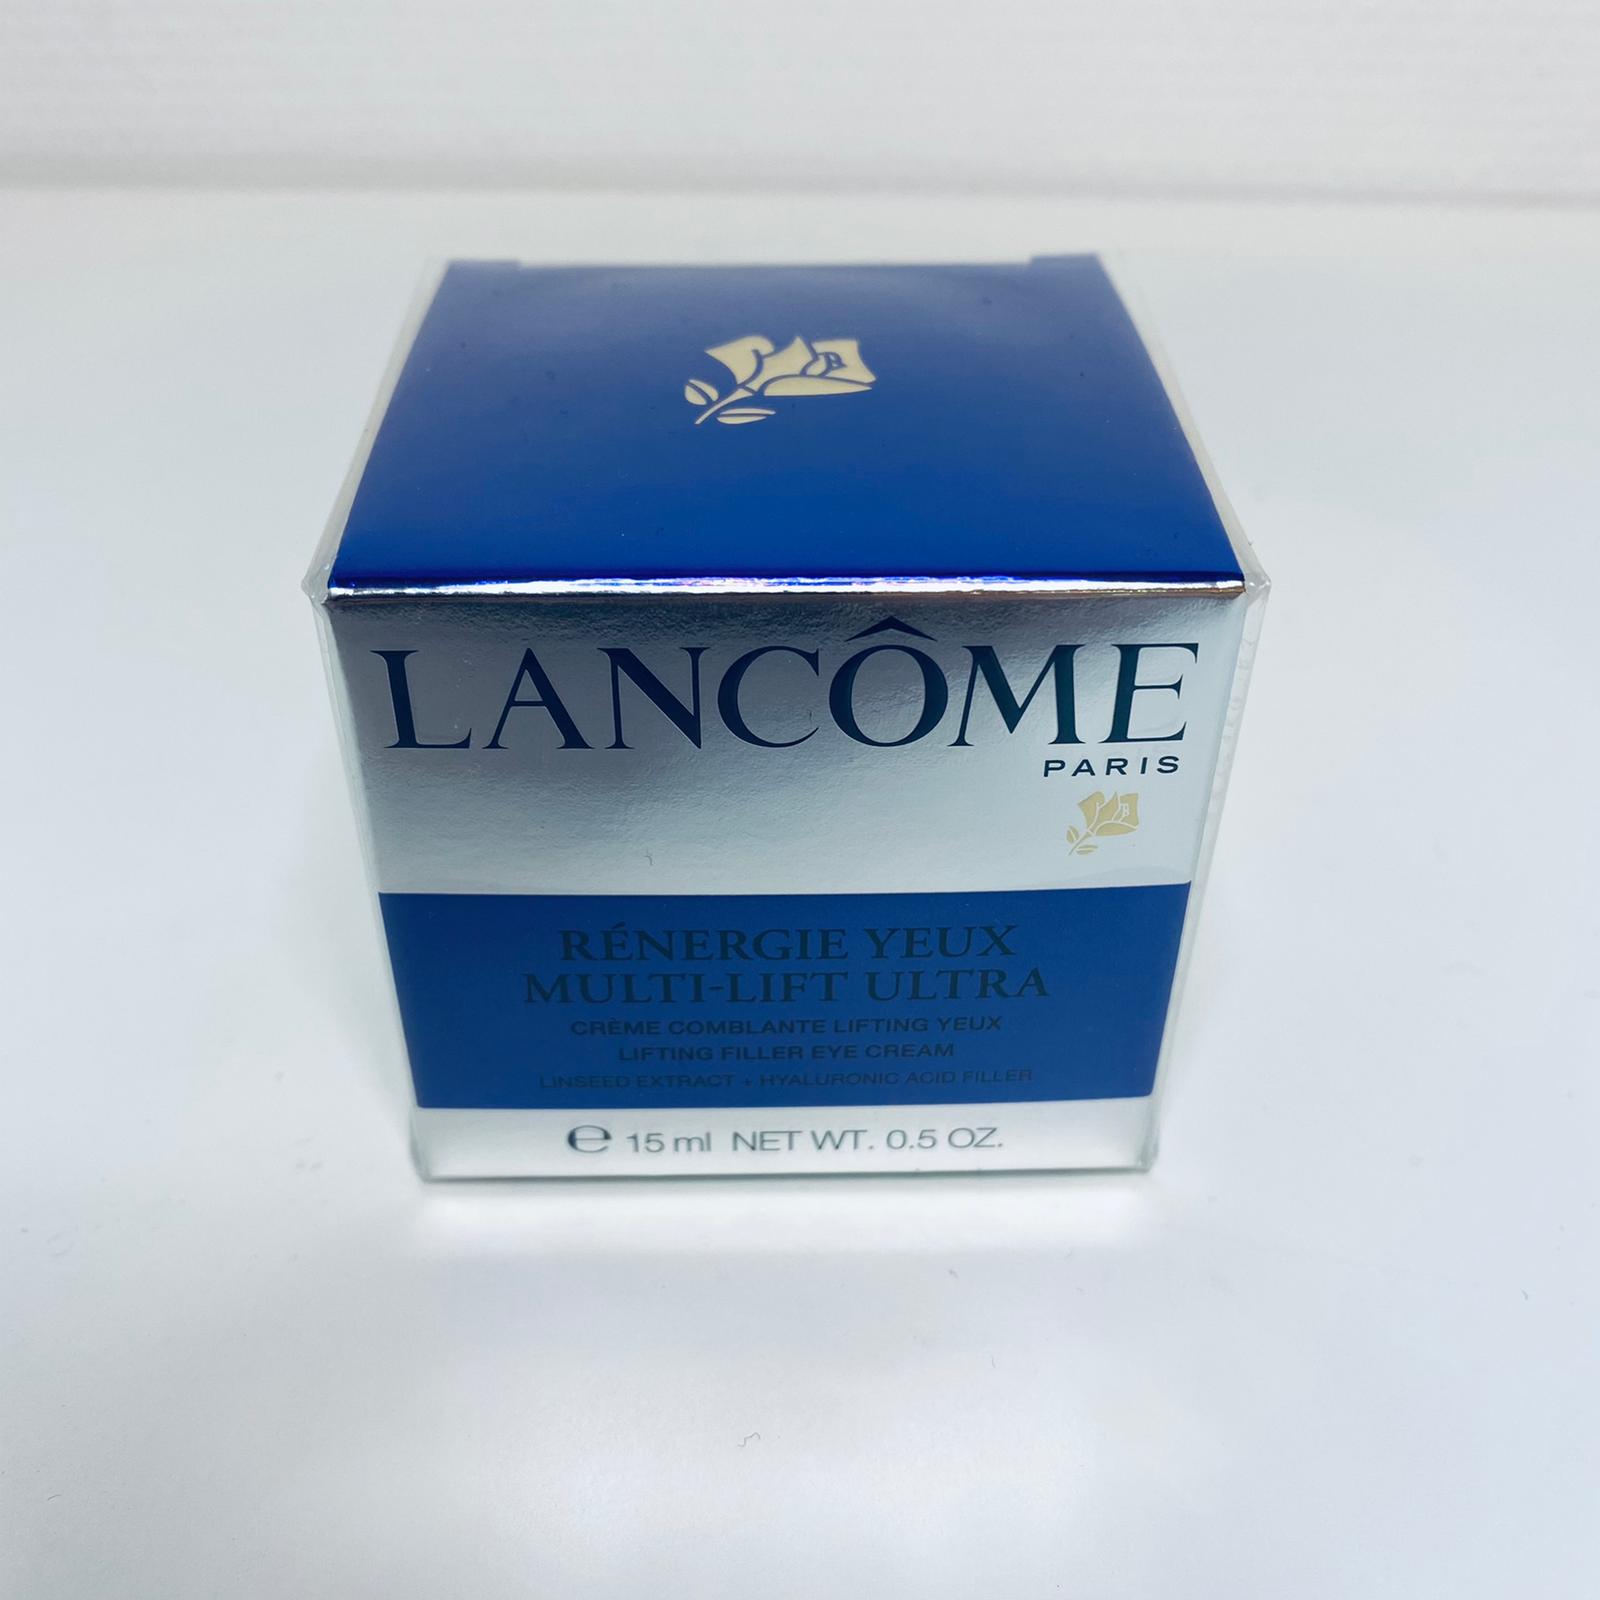 Lancome Renergie Yeux Multi Lift Ultra eye cream 15 ml